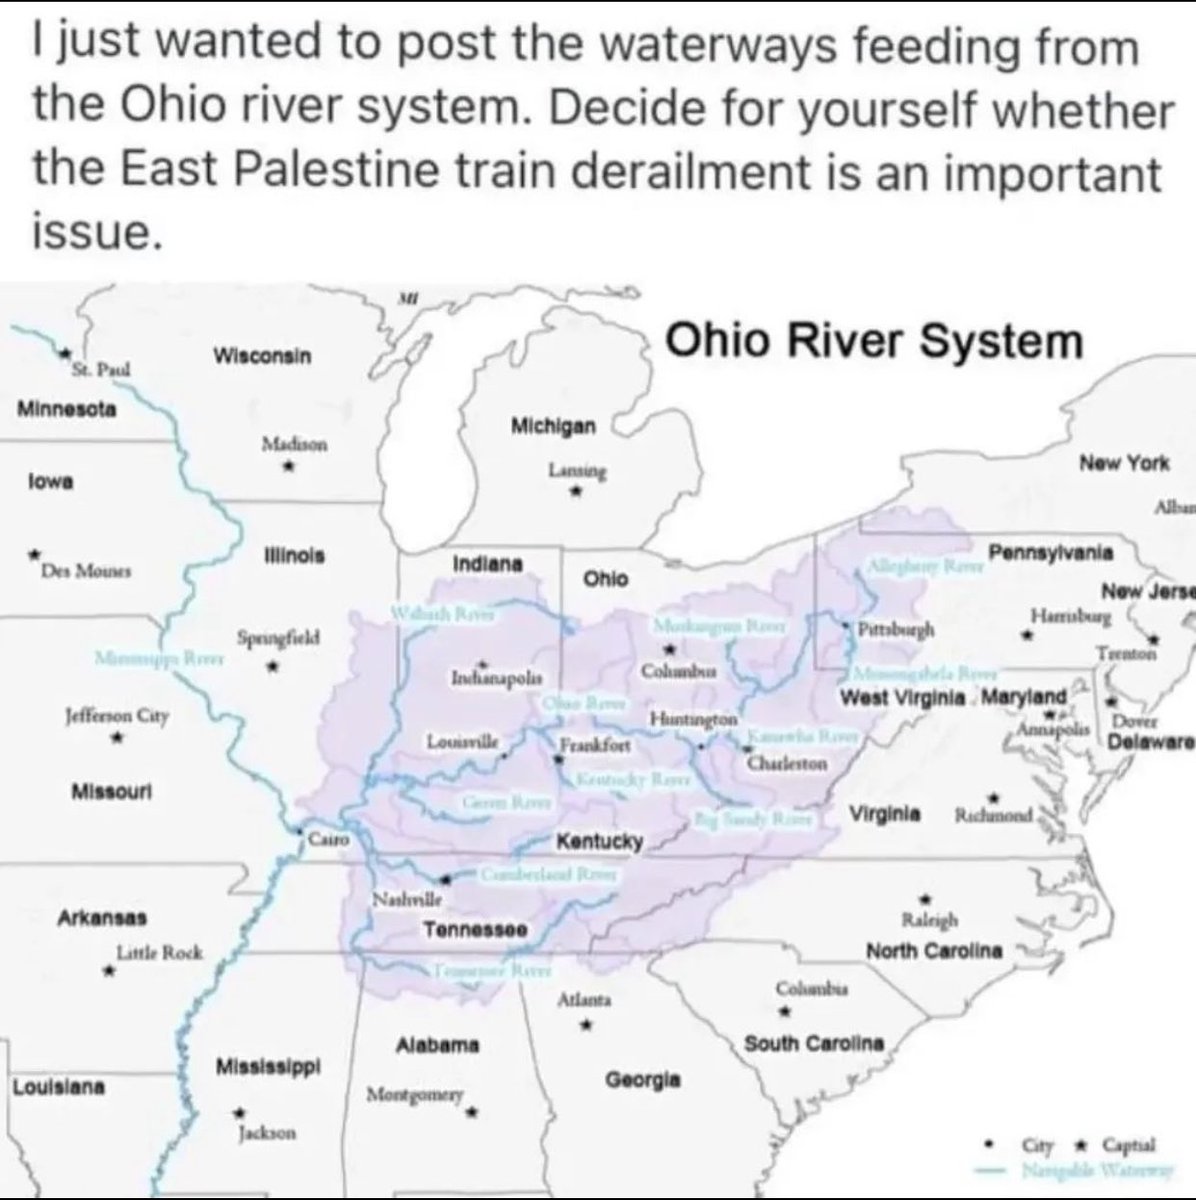 The waterways feeding from the #Ohio river system! 👀
 #OhioChemicalDisaster #OhioChernobyl #OhioRiver #ohioderailment